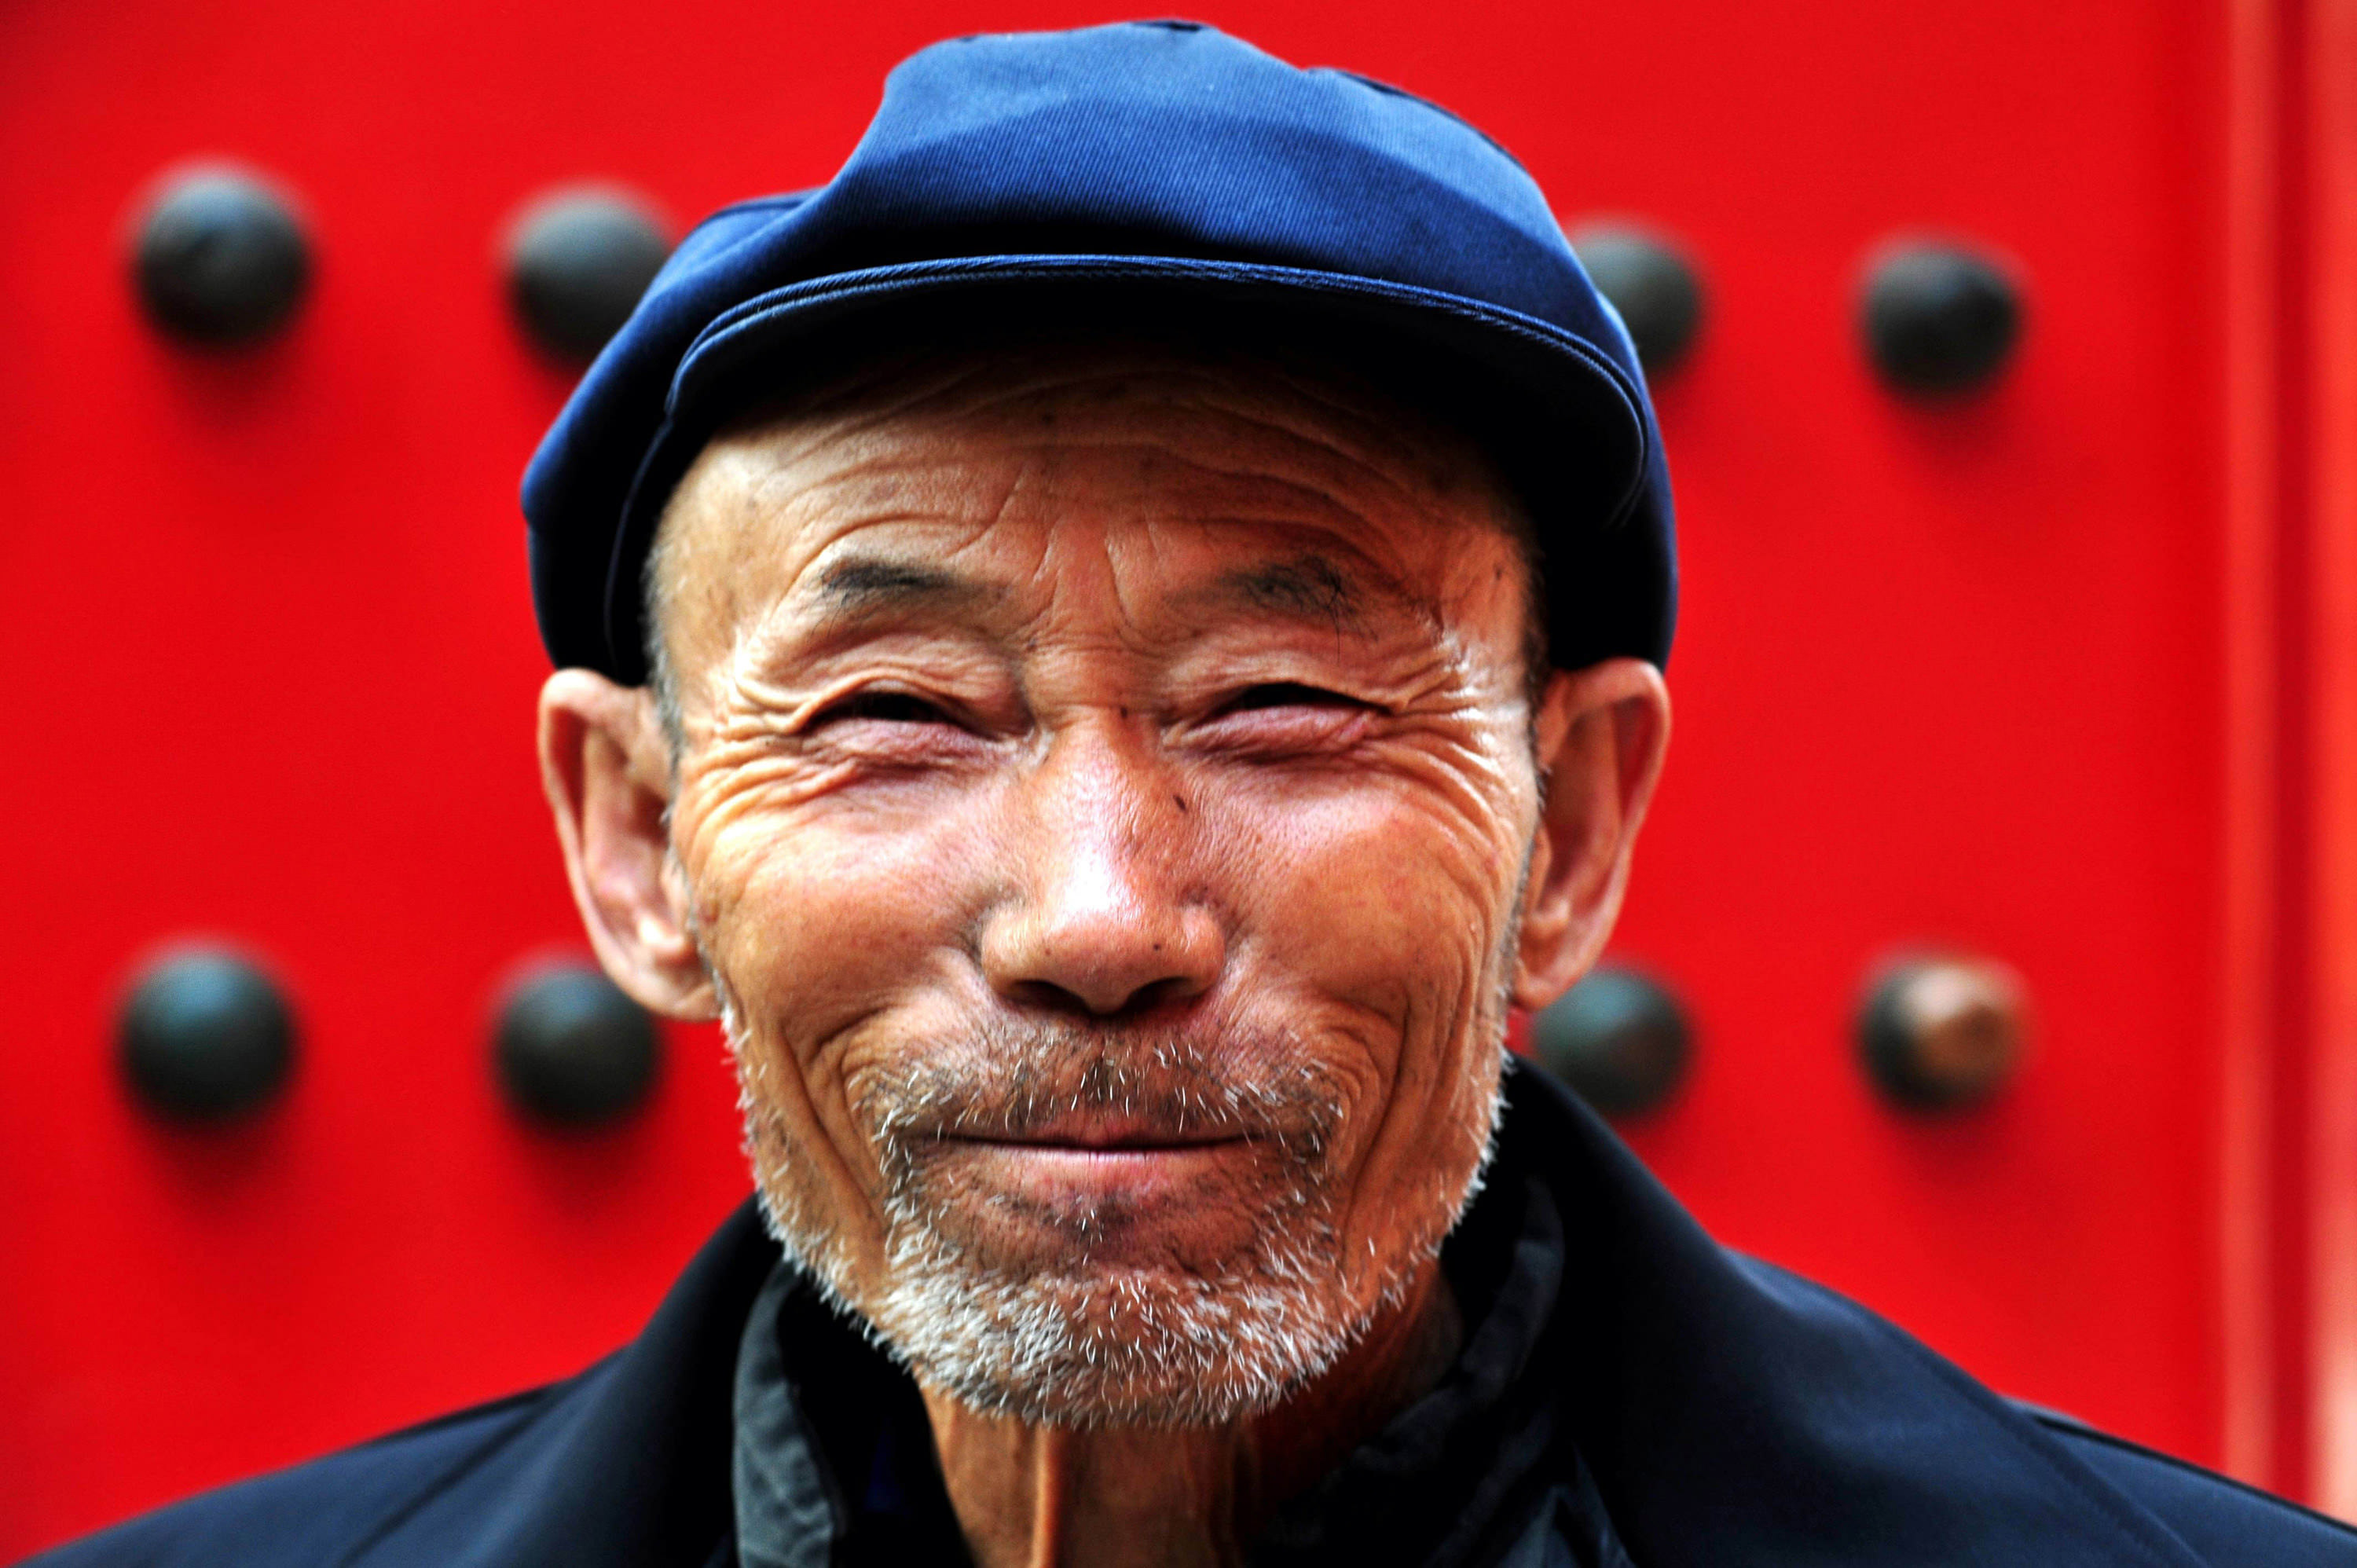 older man smiling